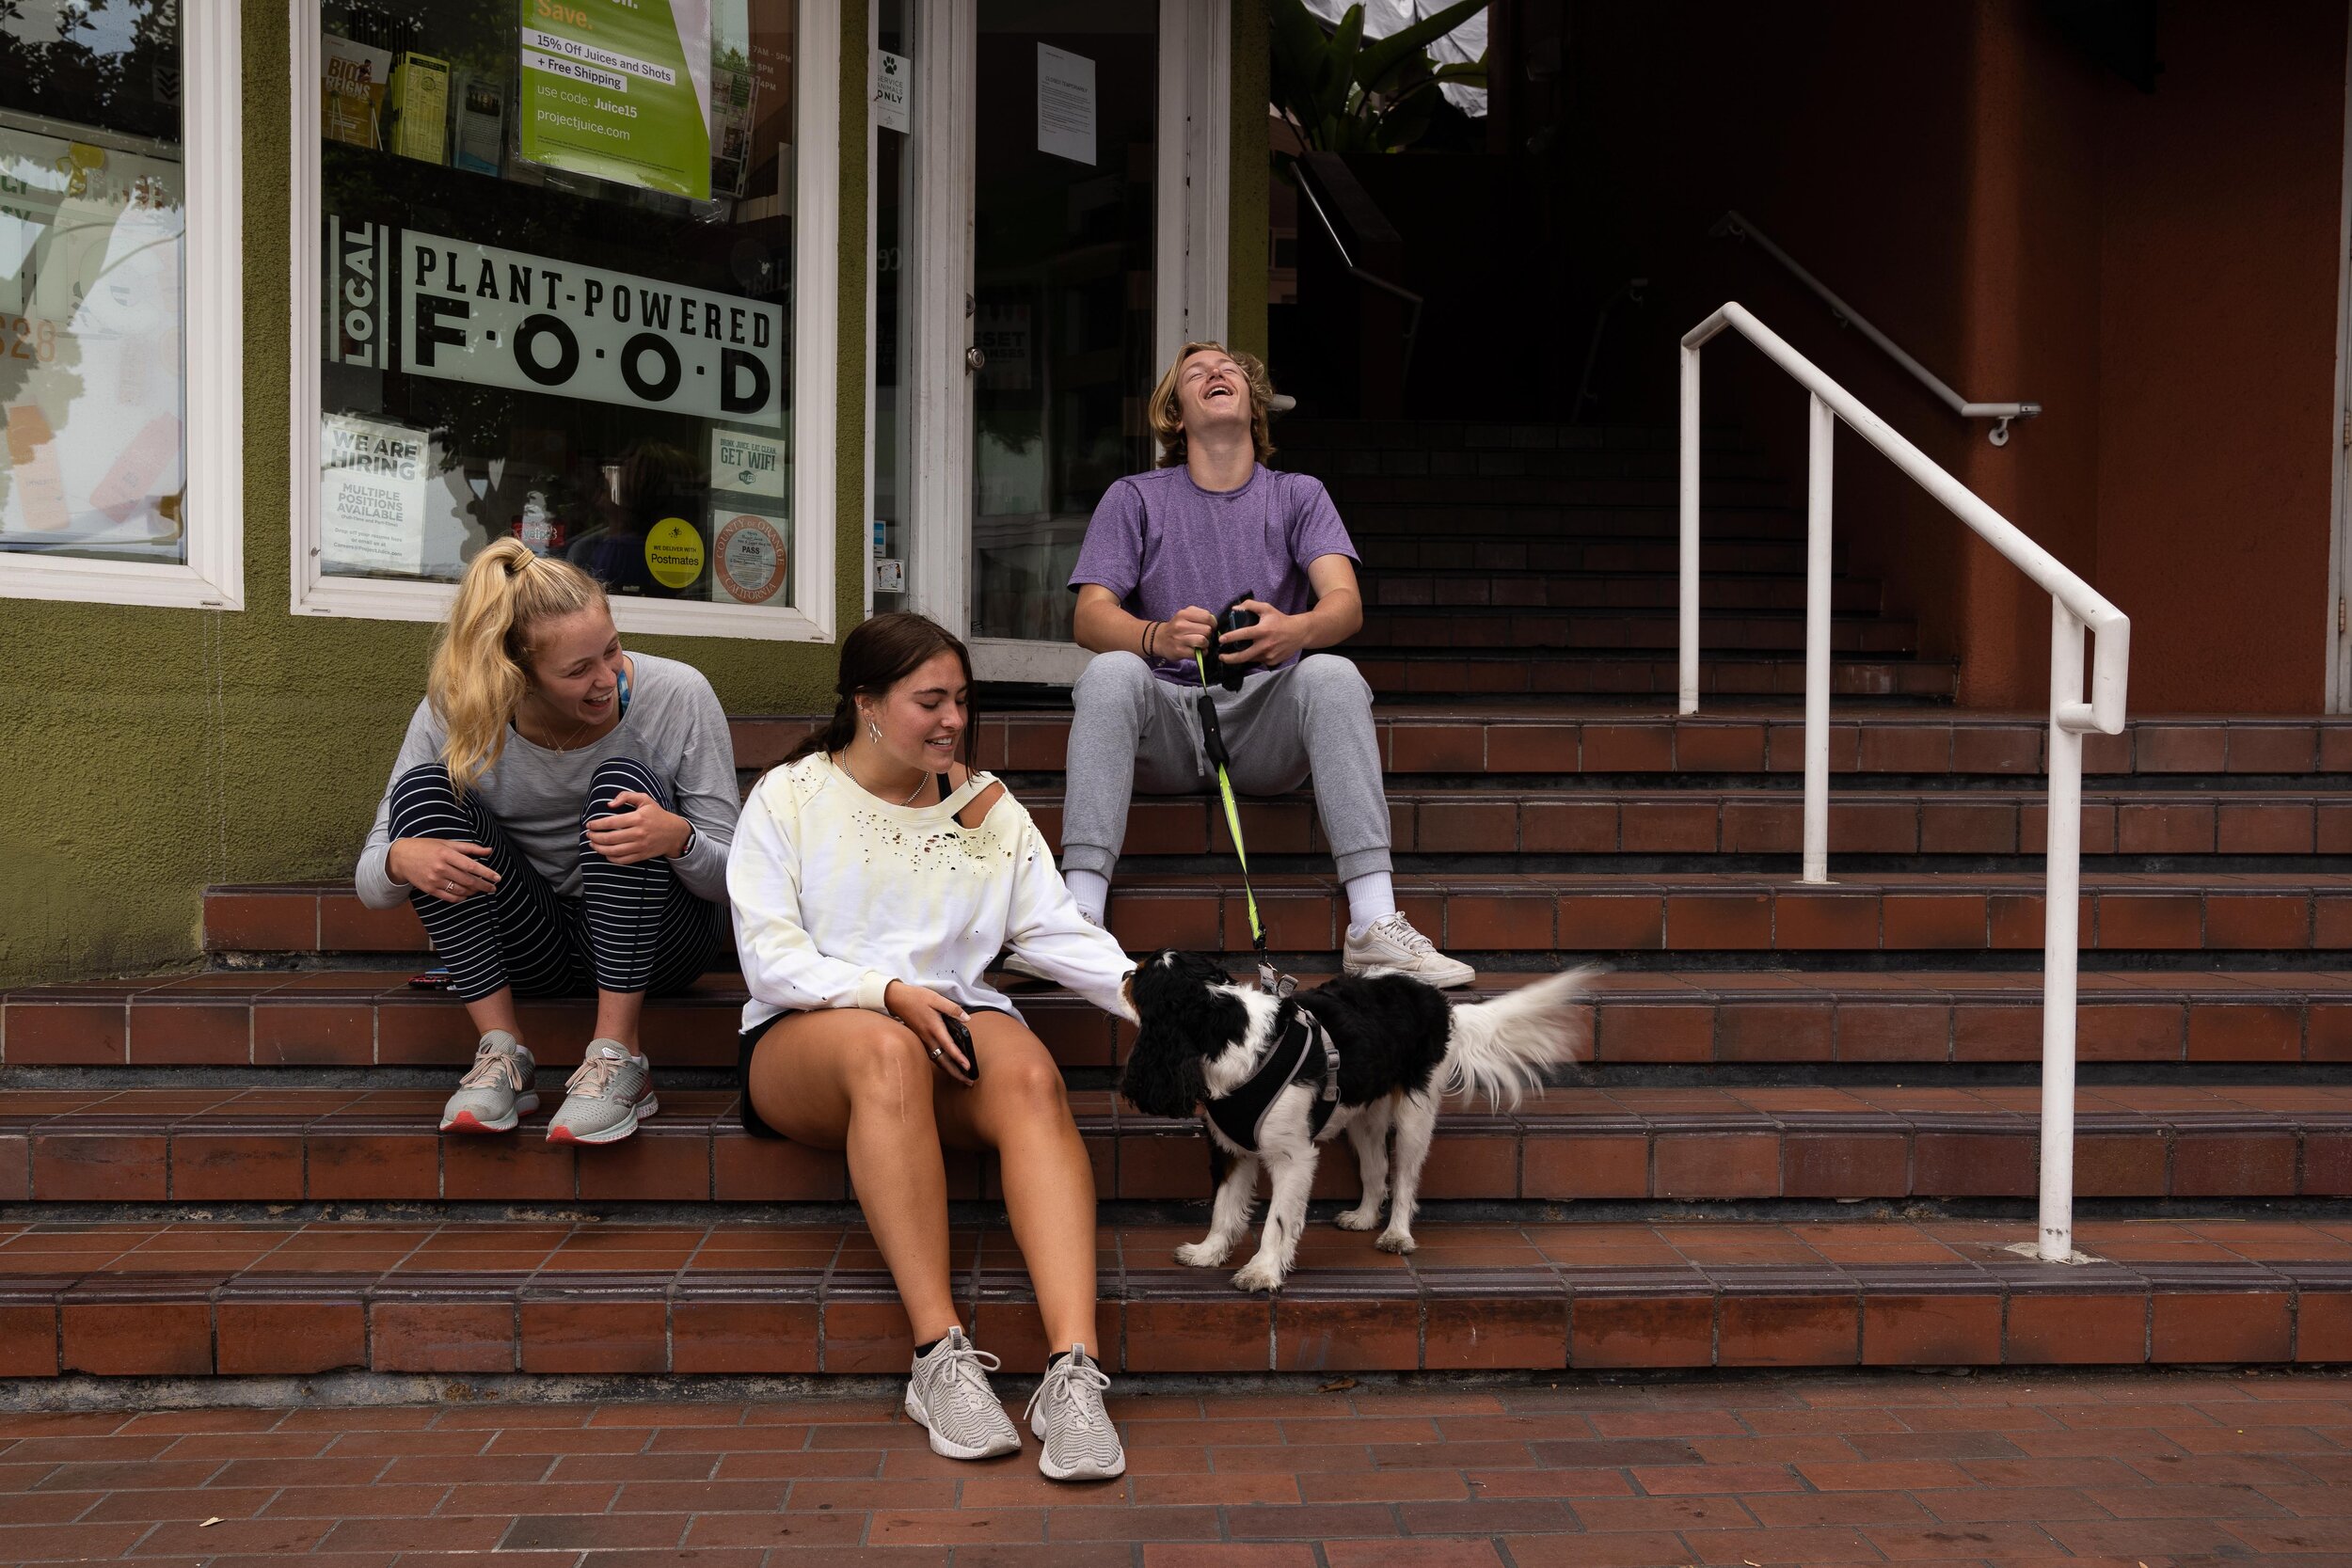  “We’re just waiting for breakfast too.” - Damon (Kendra, Haley, Damon, Dude the dog) | 04/30/20 (Laguna Beach, CA)  